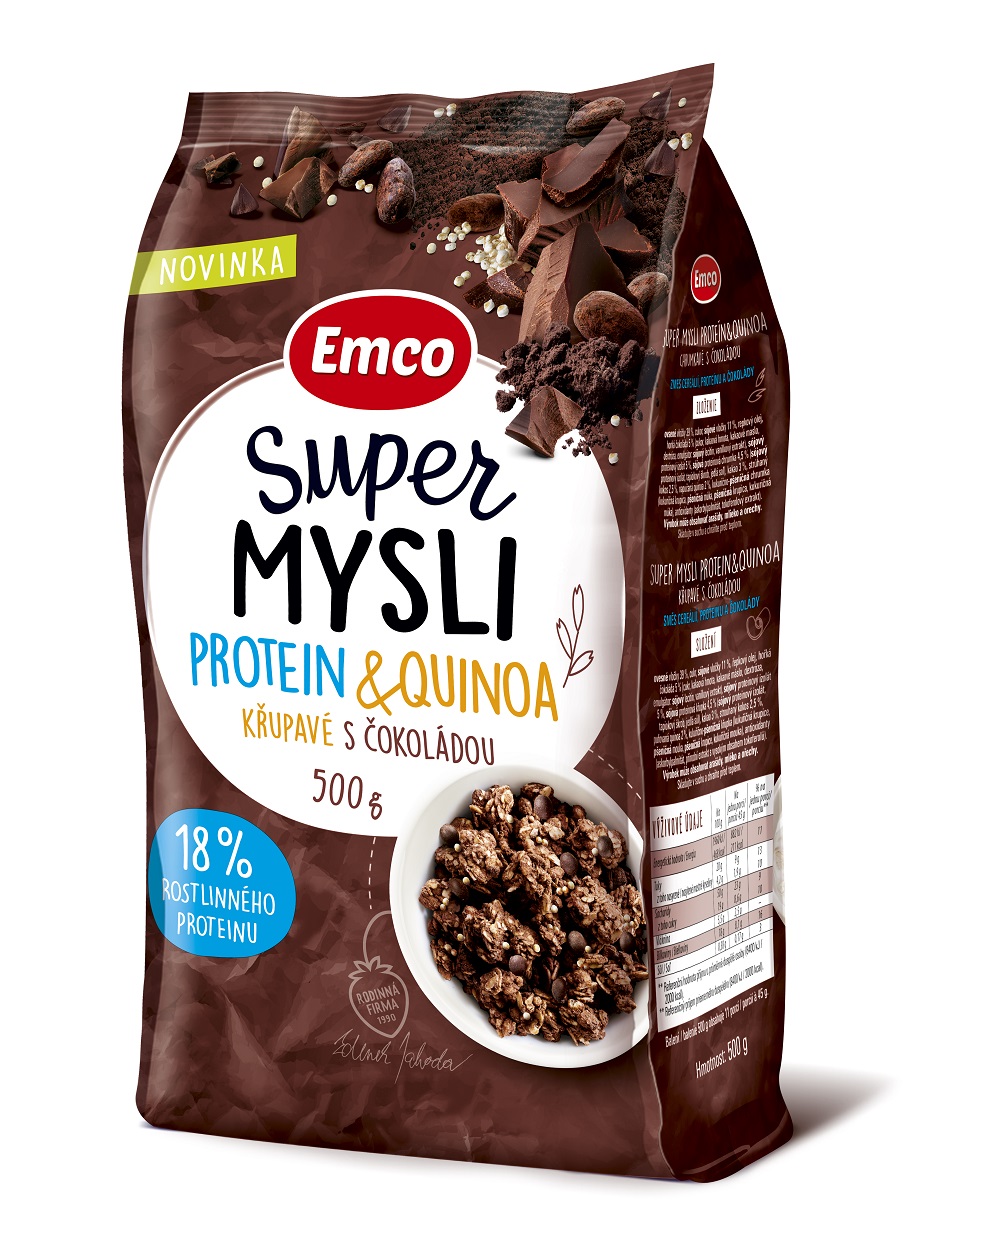 Super Mysli Protein & Quinoa křupavé s čokoládou 500 g